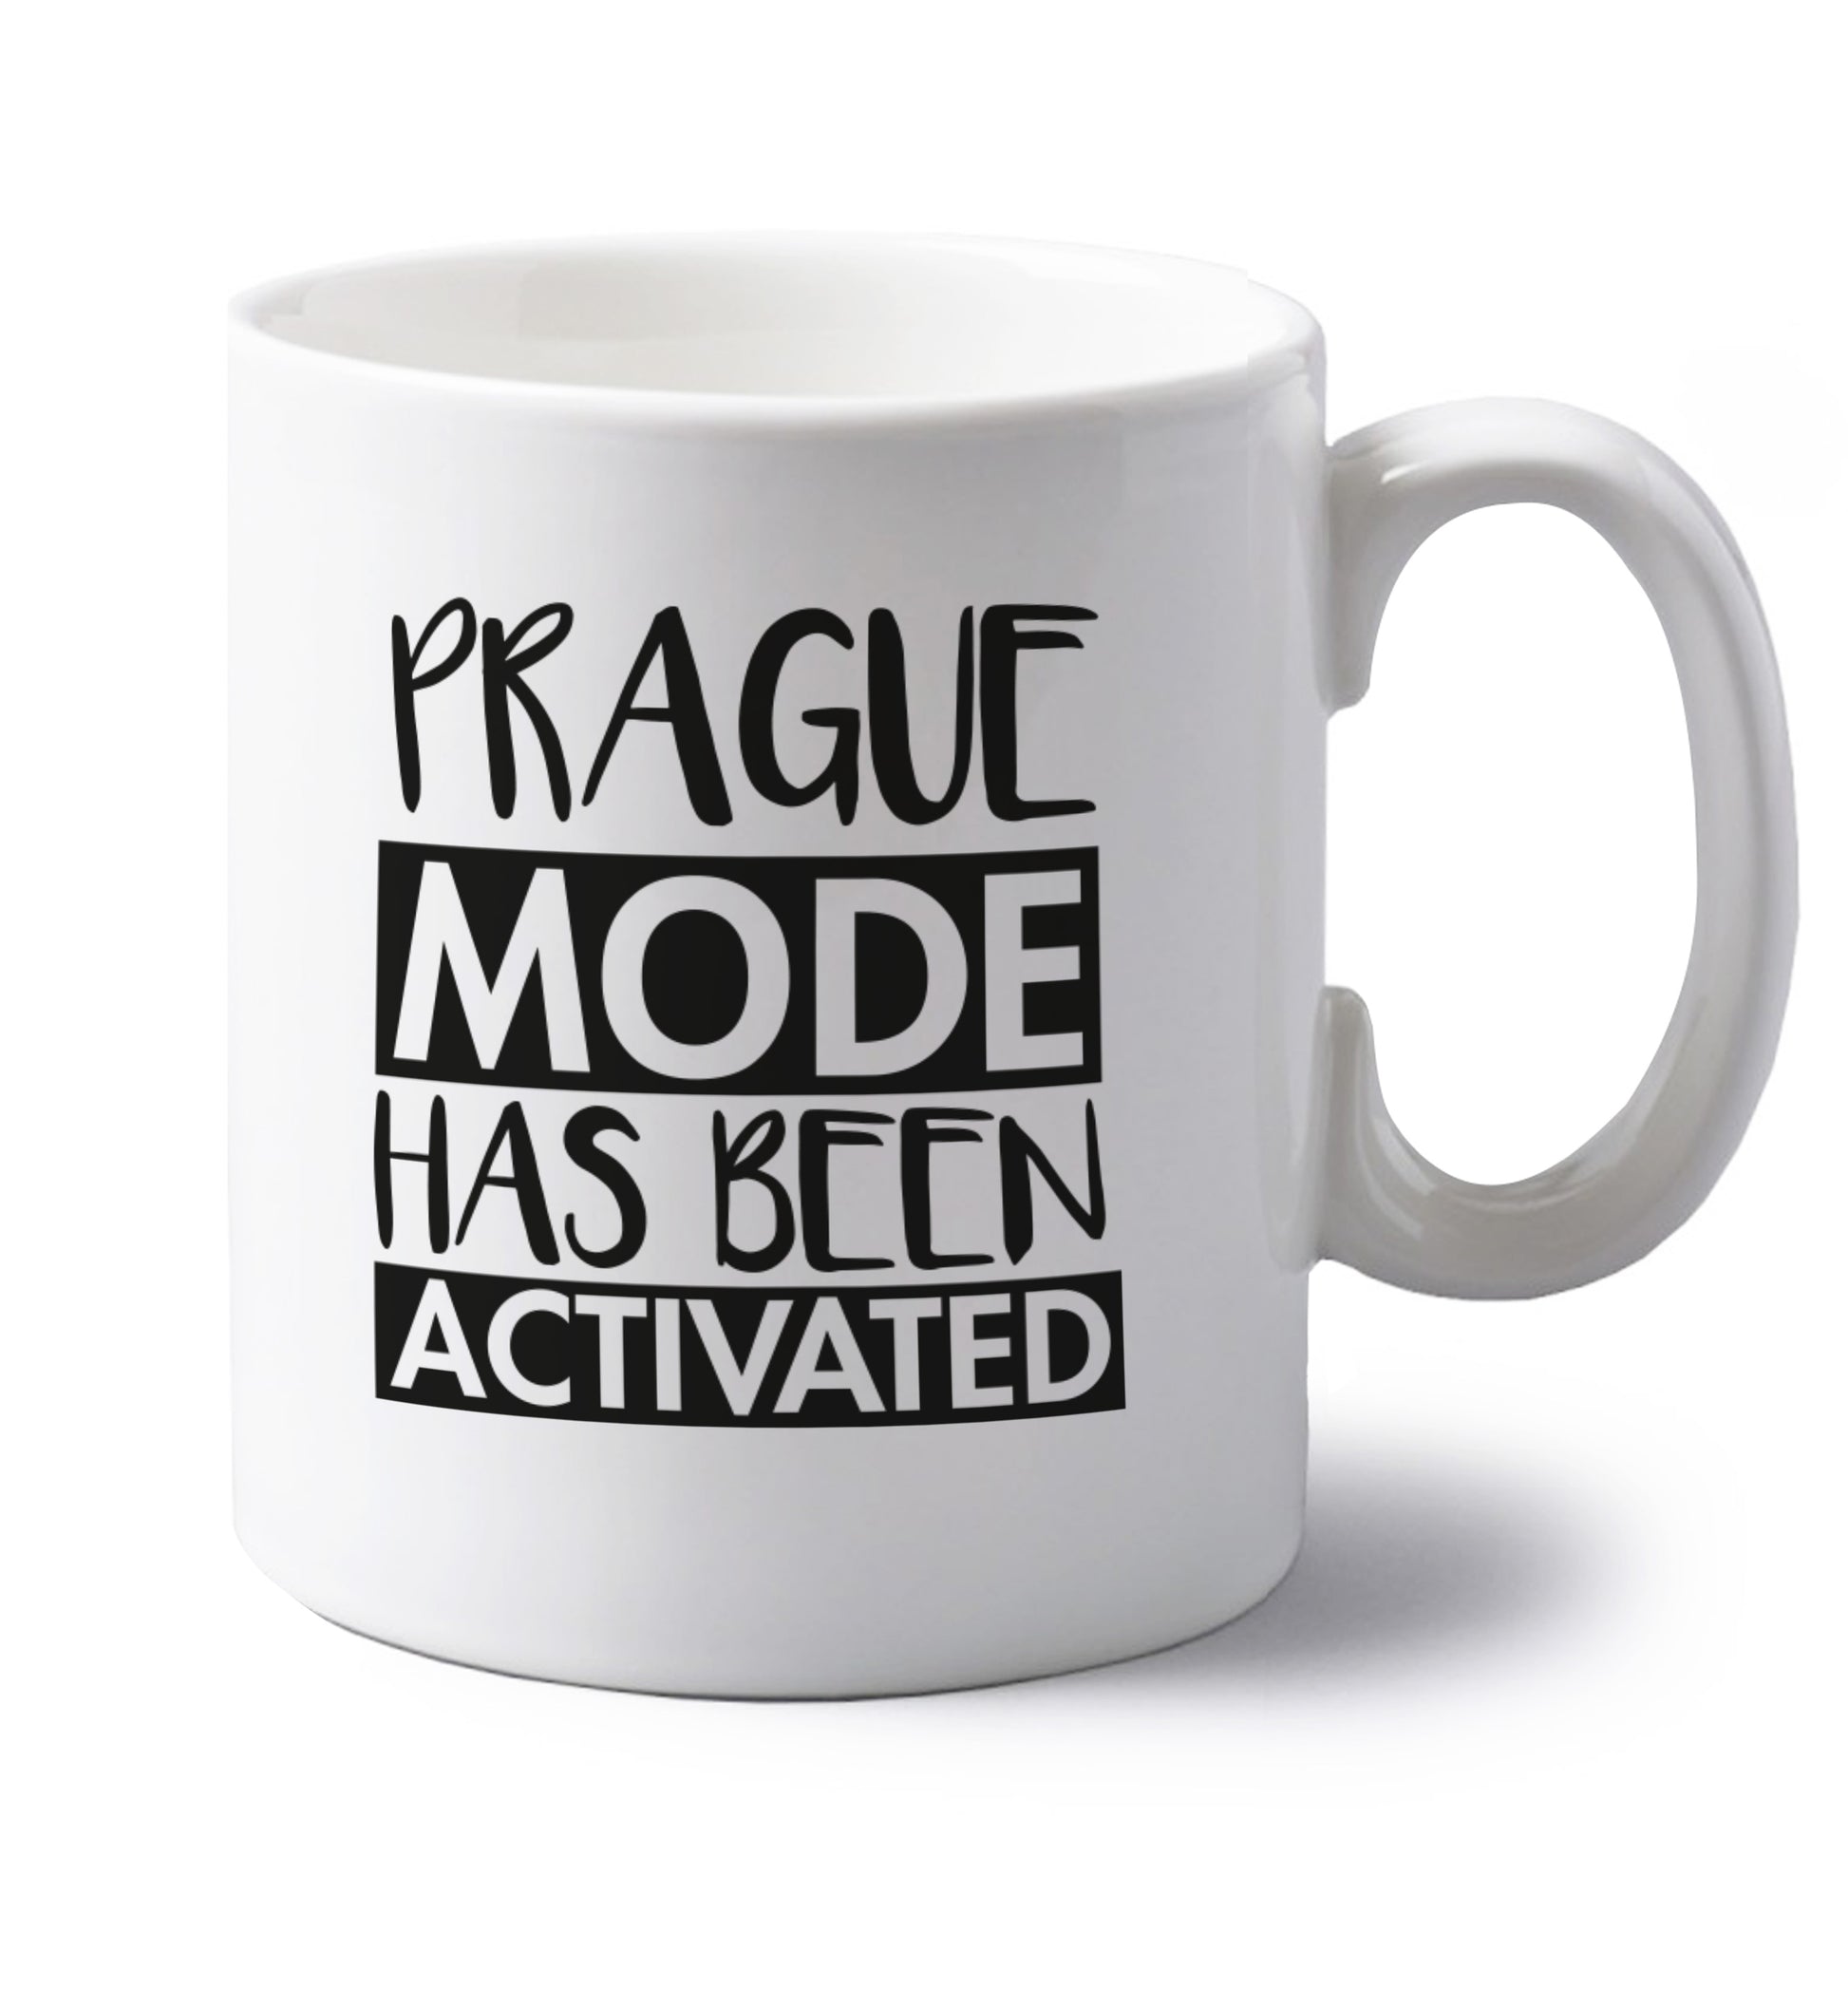 Prague mode has been activated left handed white ceramic mug 